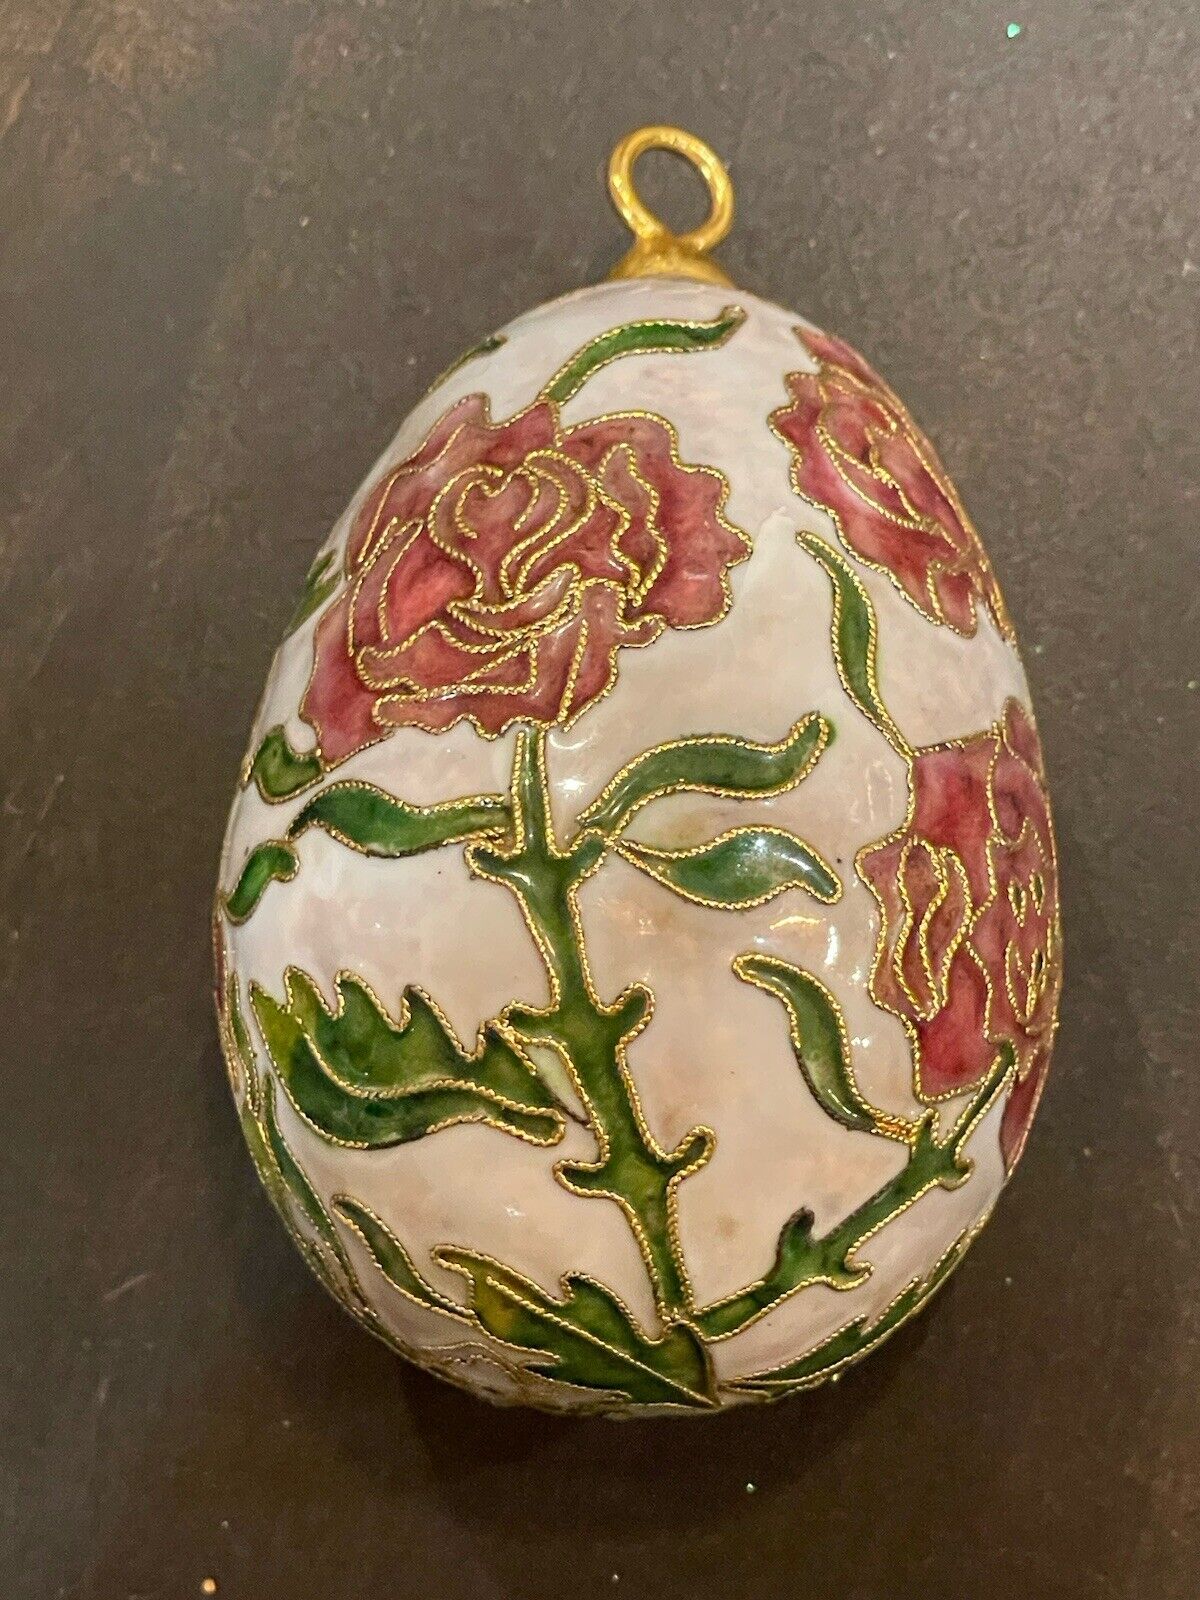 Vintage Cloisonne Enamel Floral Egg 4 inch GOLD ACCENTS 91